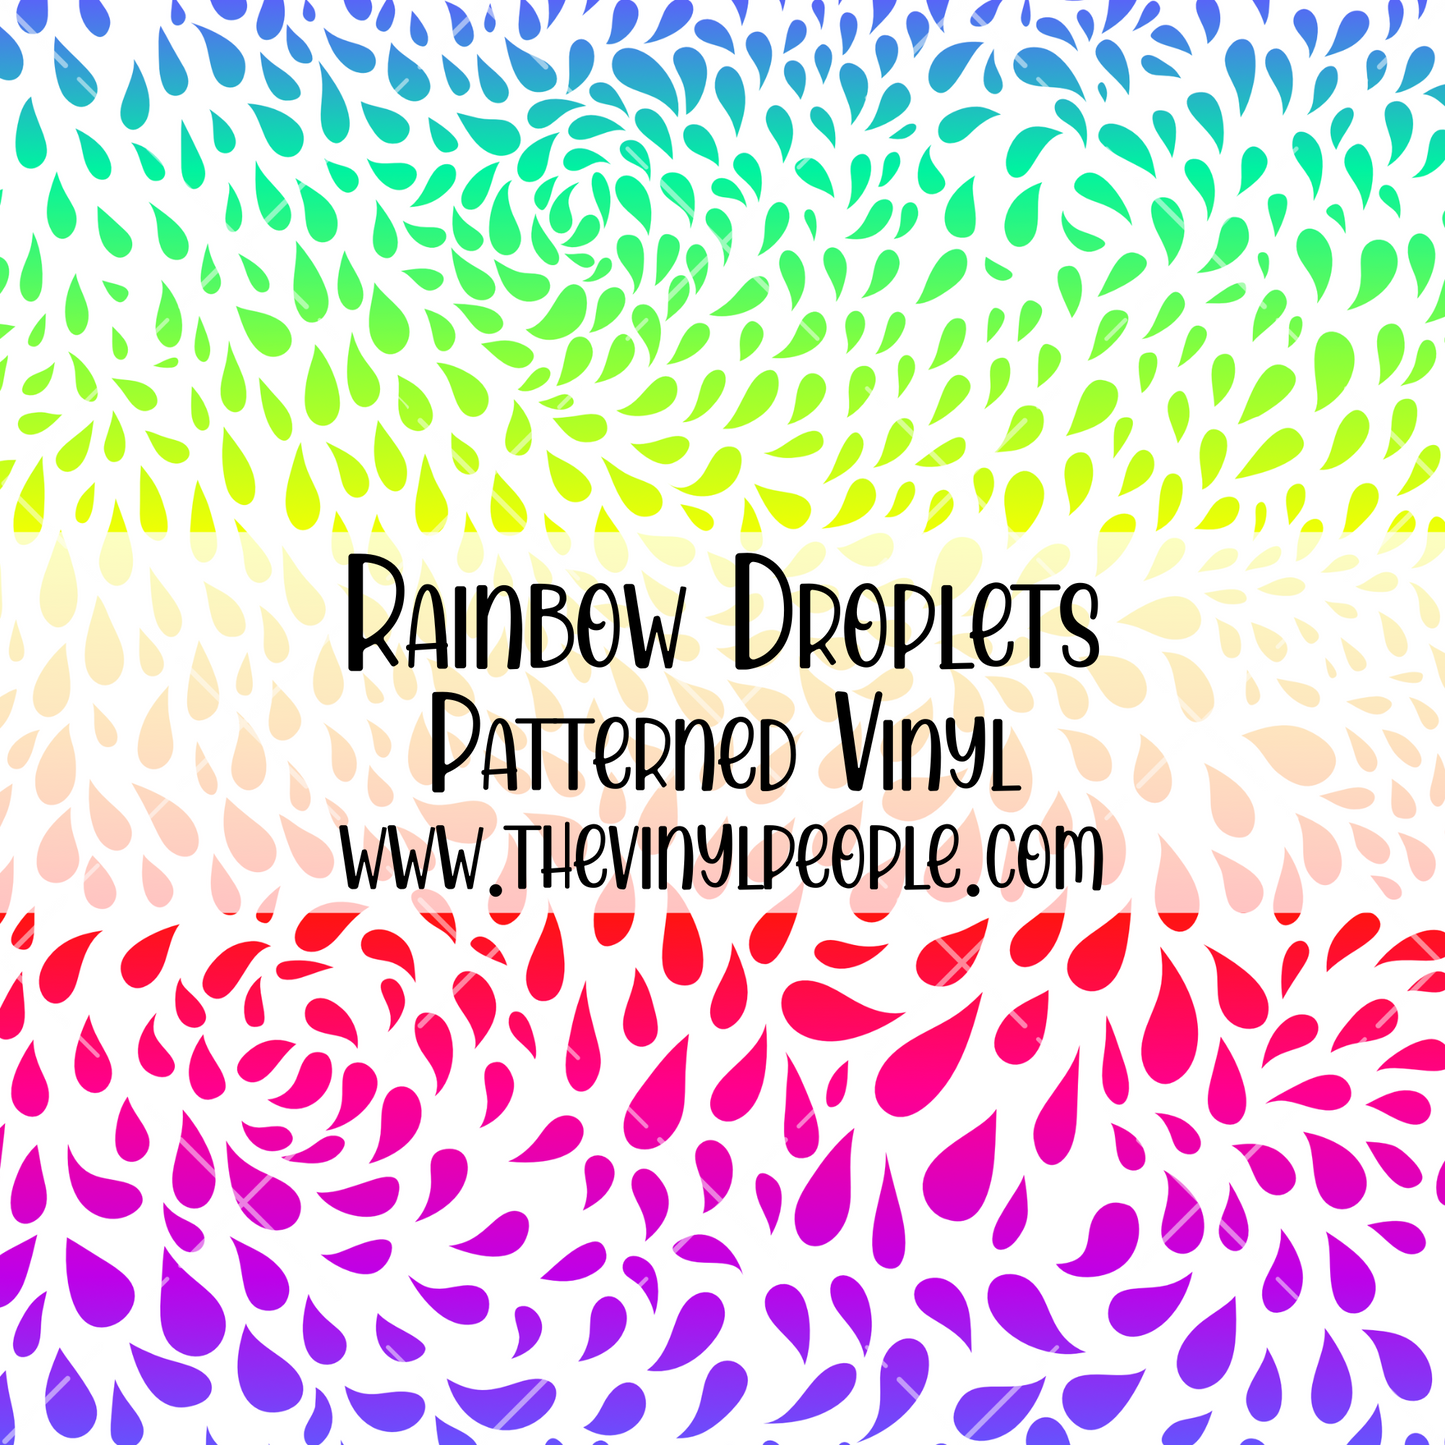 Rainbow Droplets Patterned Vinyl